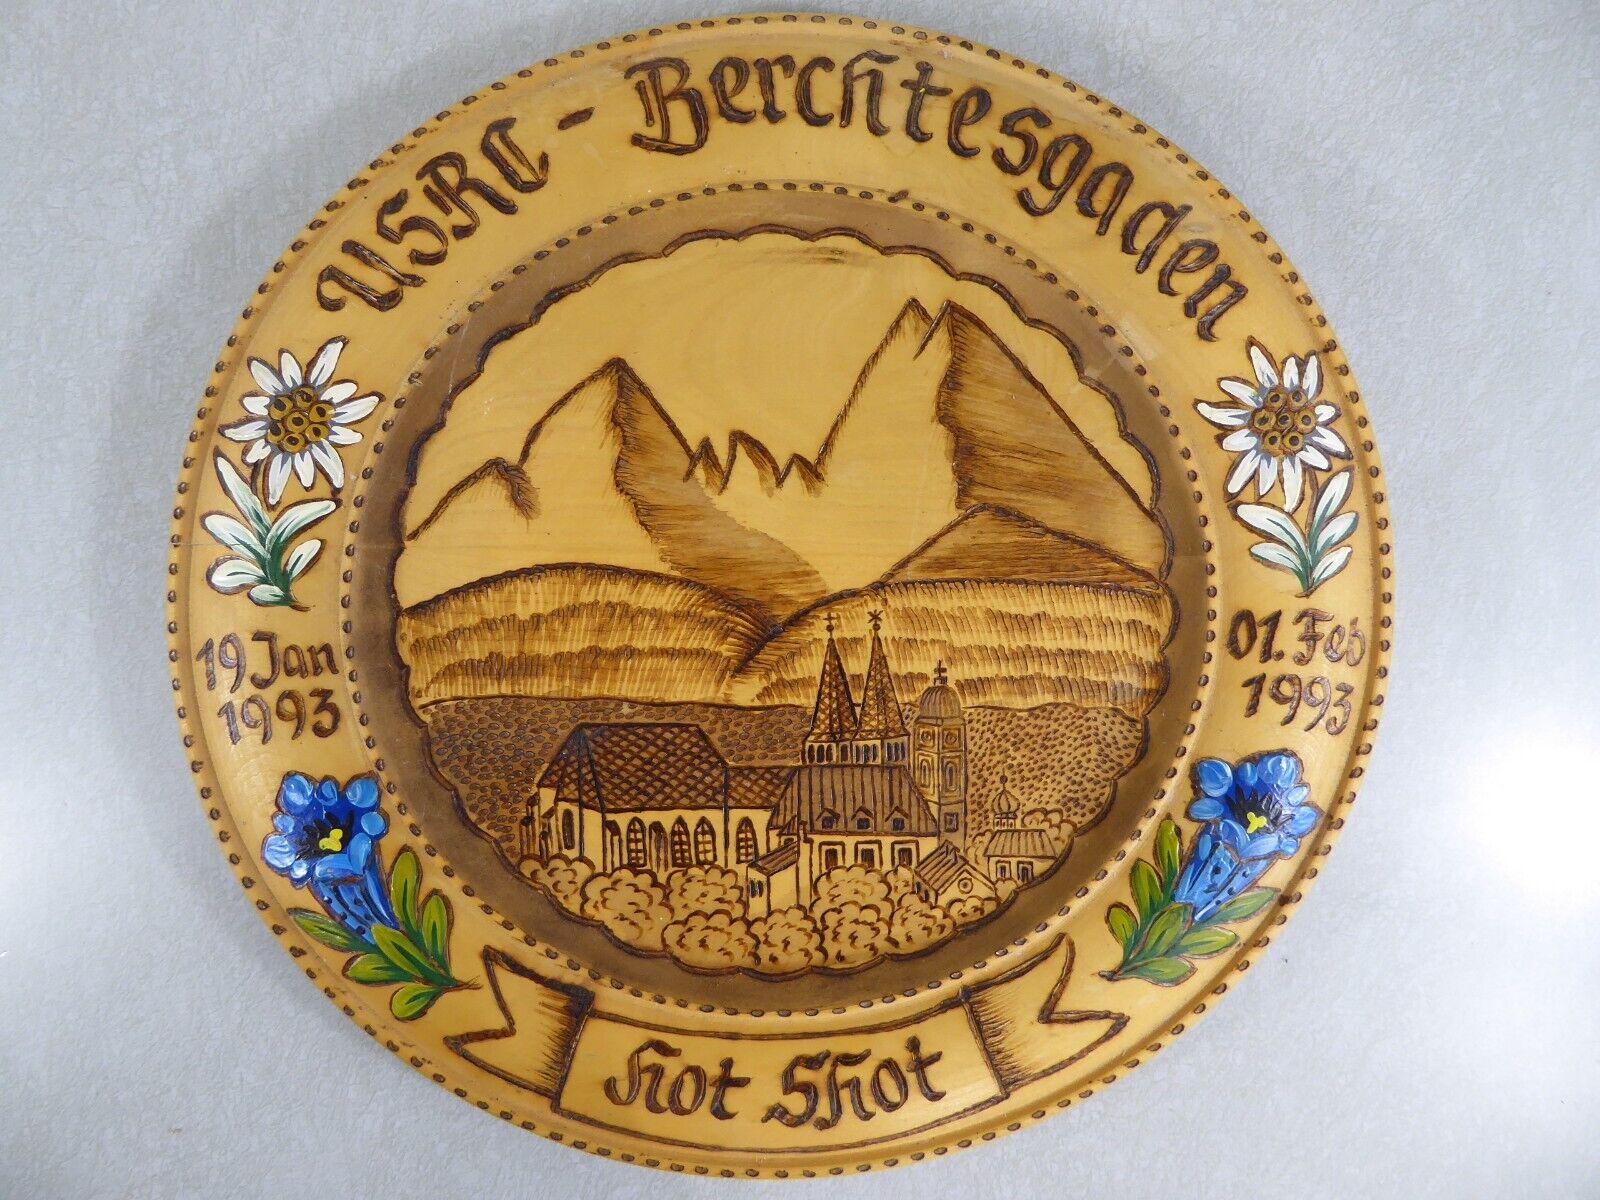 USRC - Berchtesgaden Souvenir Commemorative Wood Plate 1993 Hot Shot RARE